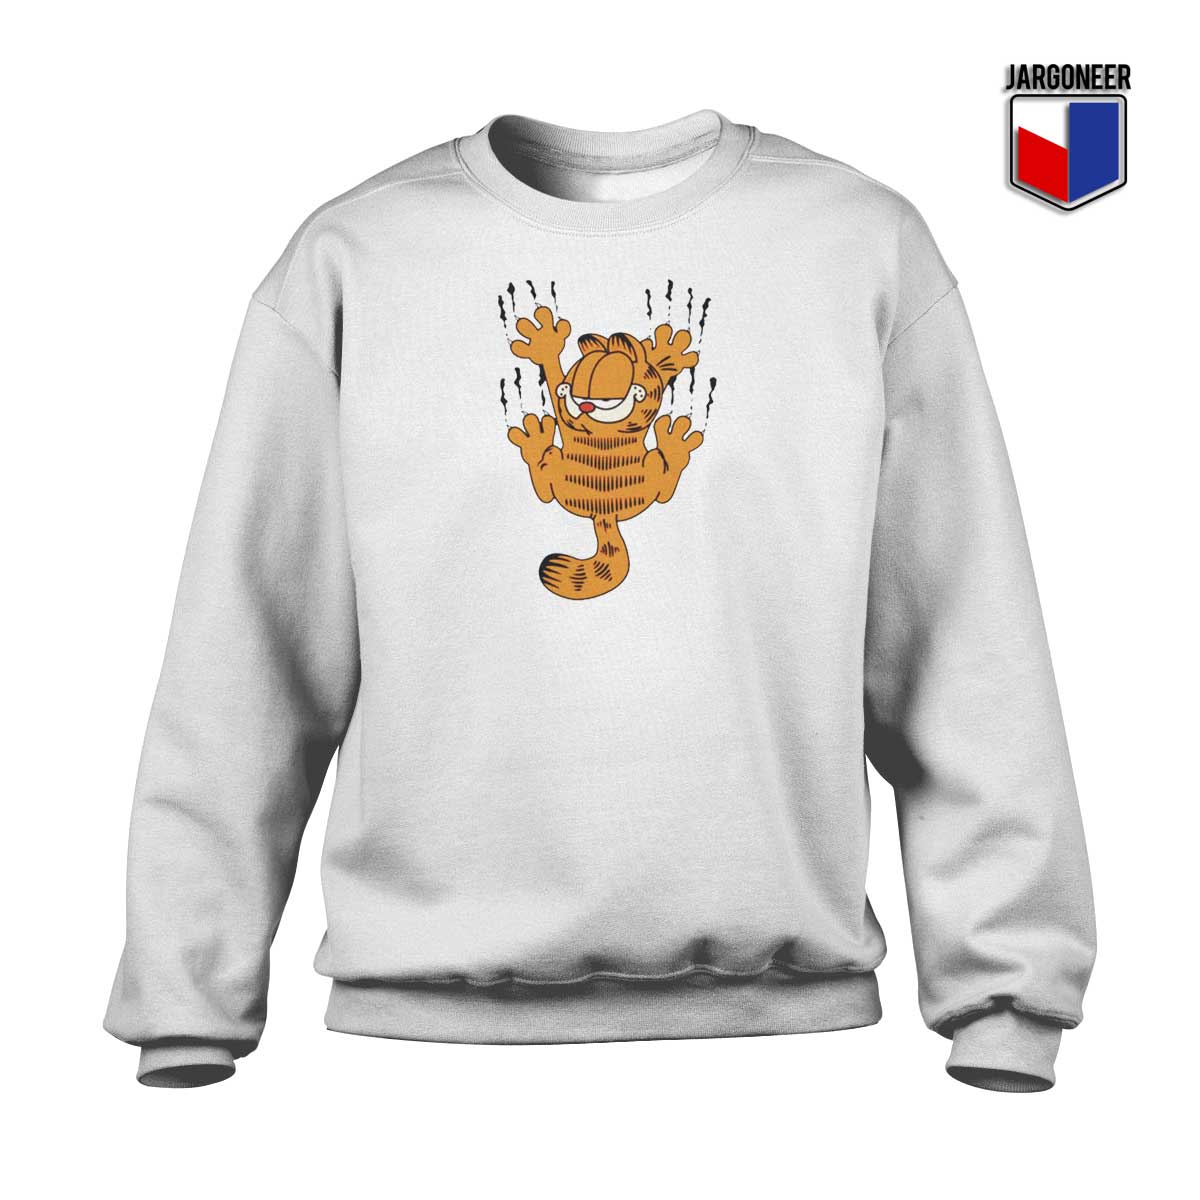 Garfield Scratching Sweatshirt - Shop Unique Graphic Cool Shirt Designs